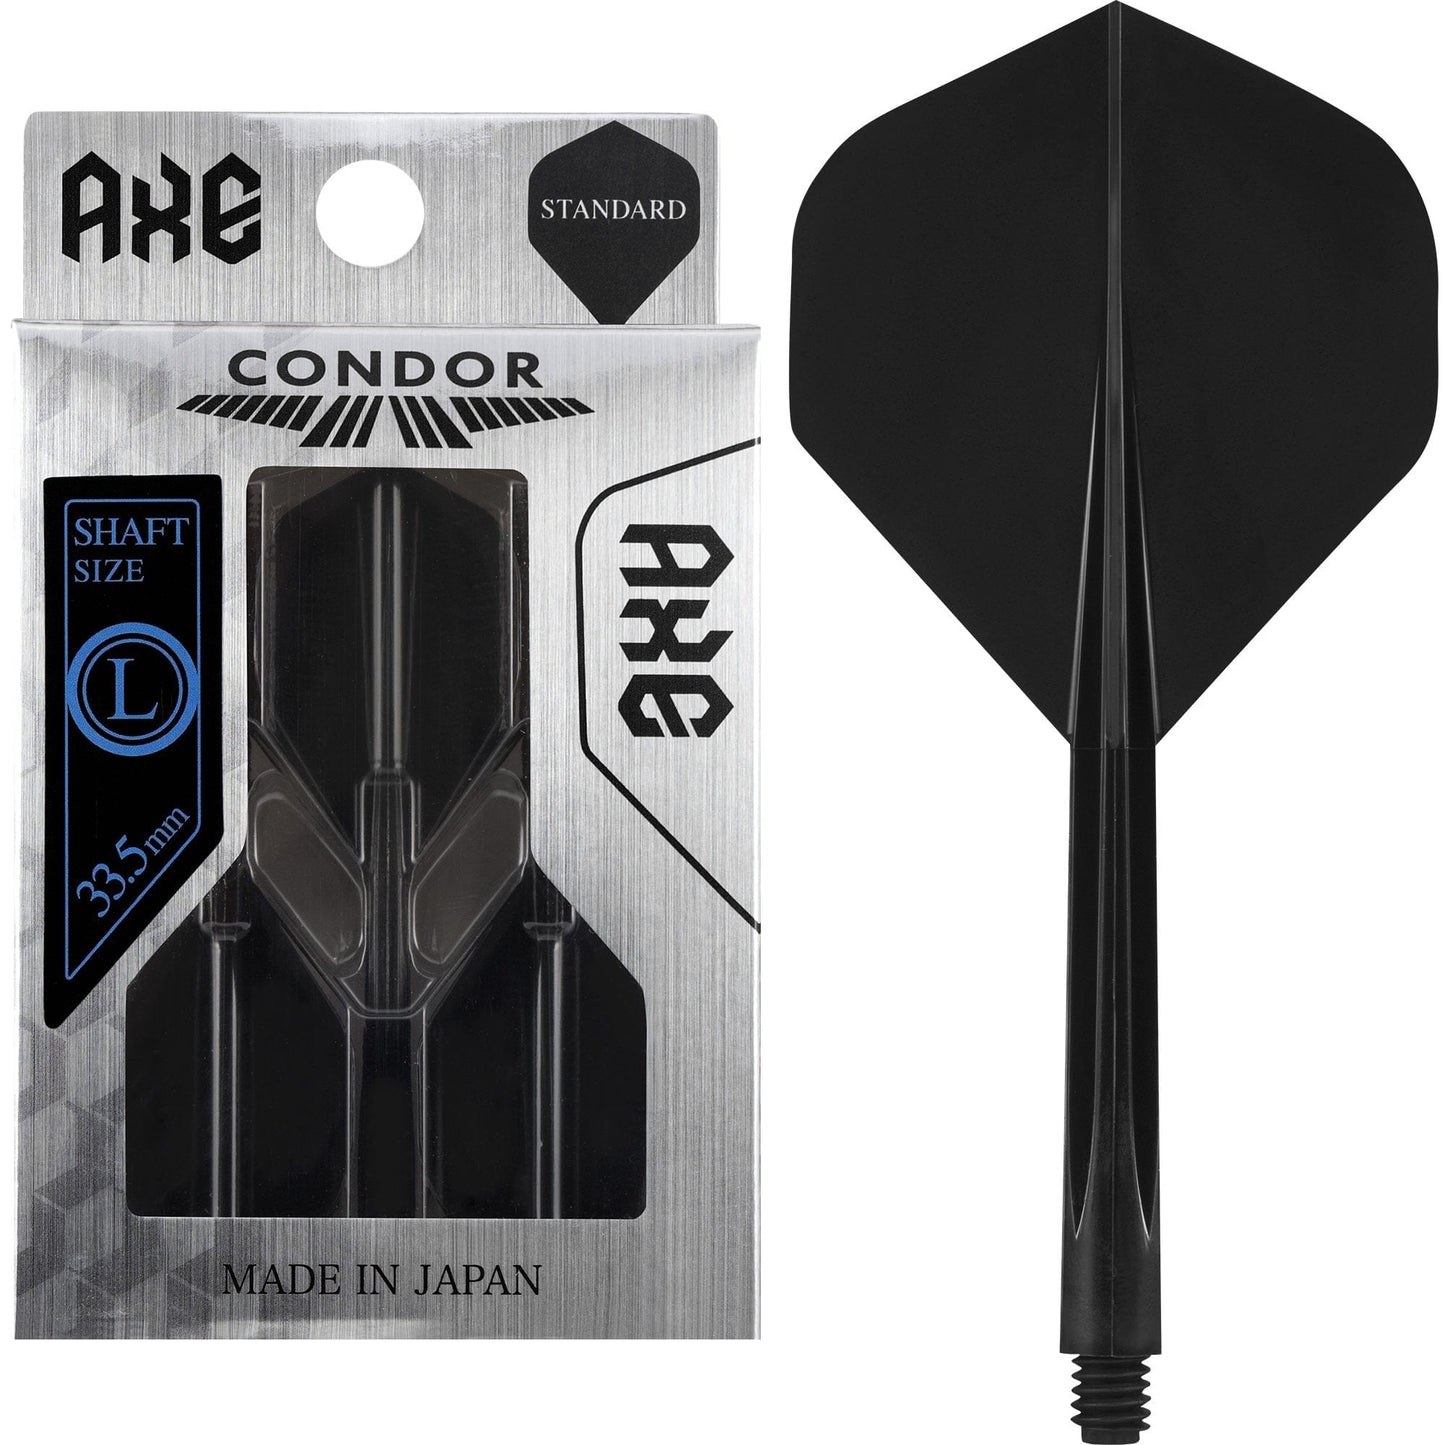 Condor AXE Dart Flights - Standard - Black Long